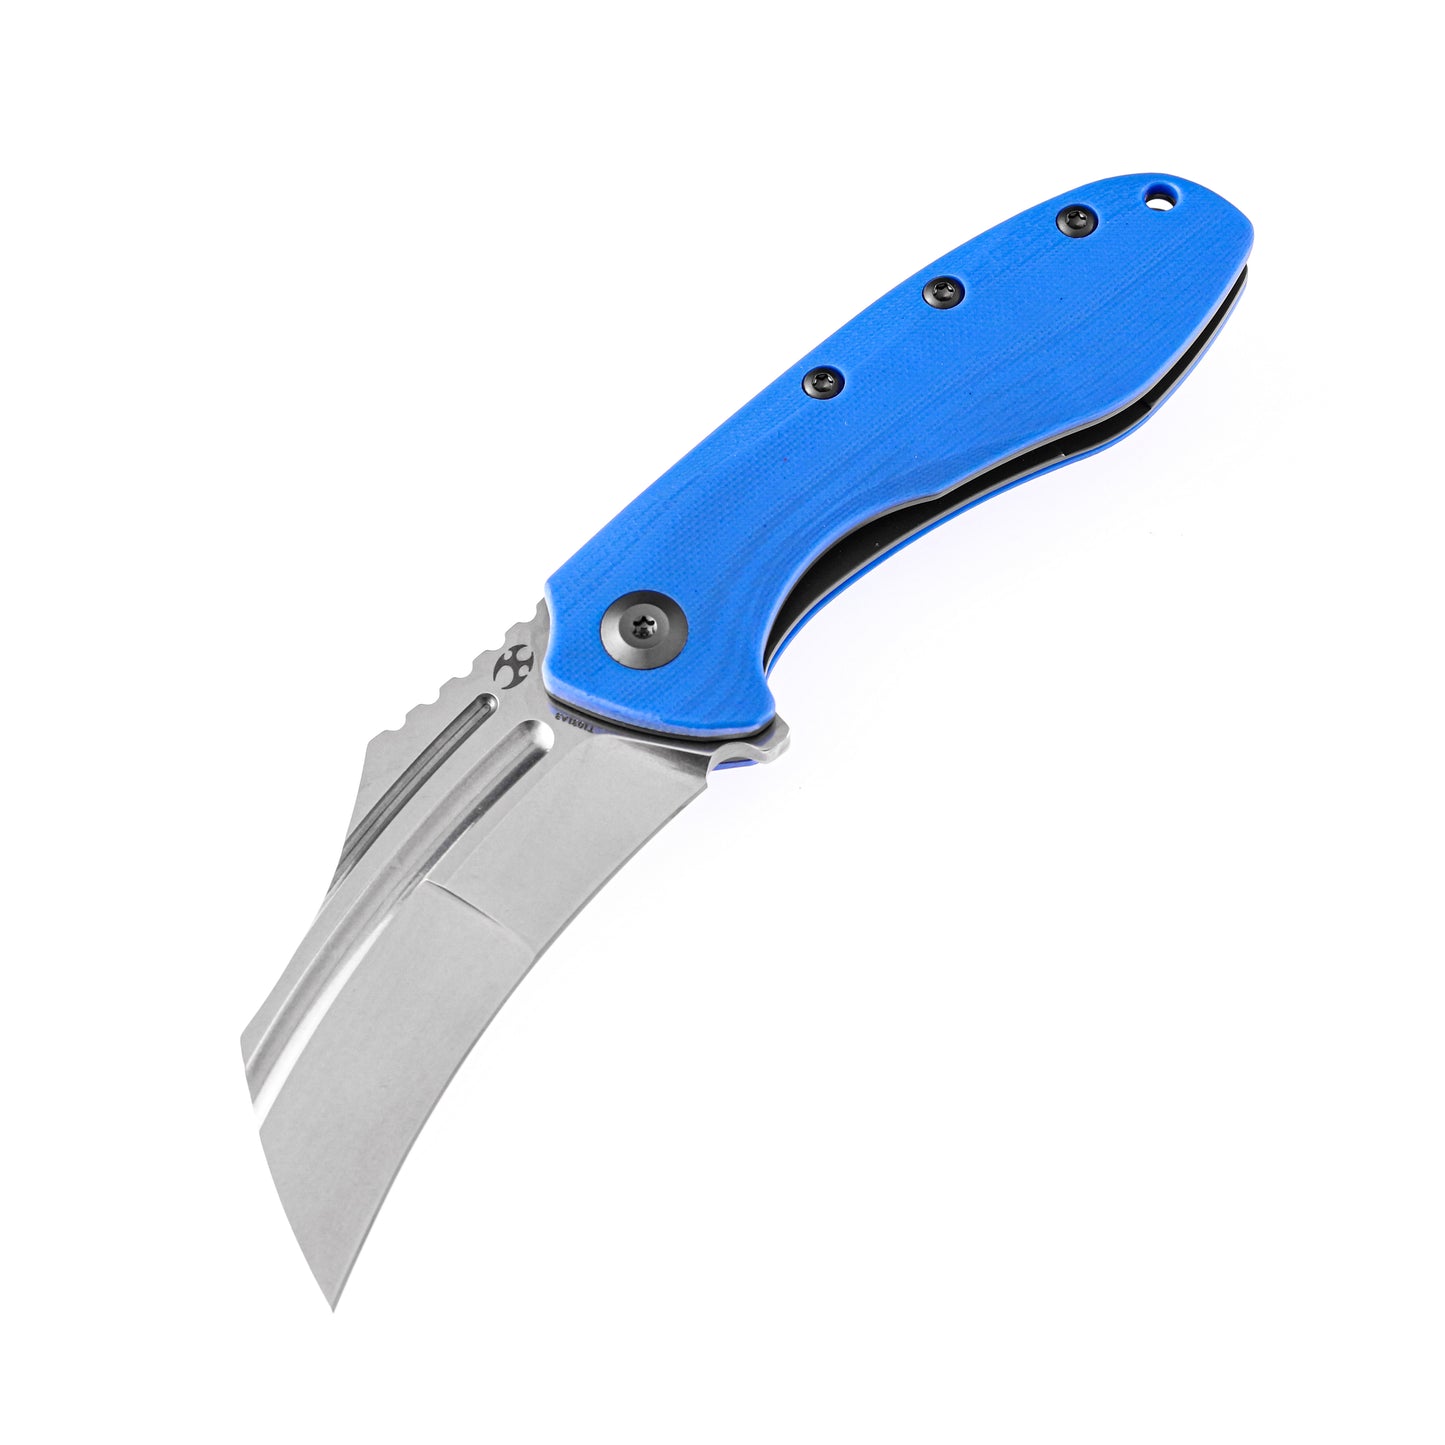 Kansept KTC3 3" Stonewashed 154CM Blue G10 Folding Knife by Koch Tools T1031A3